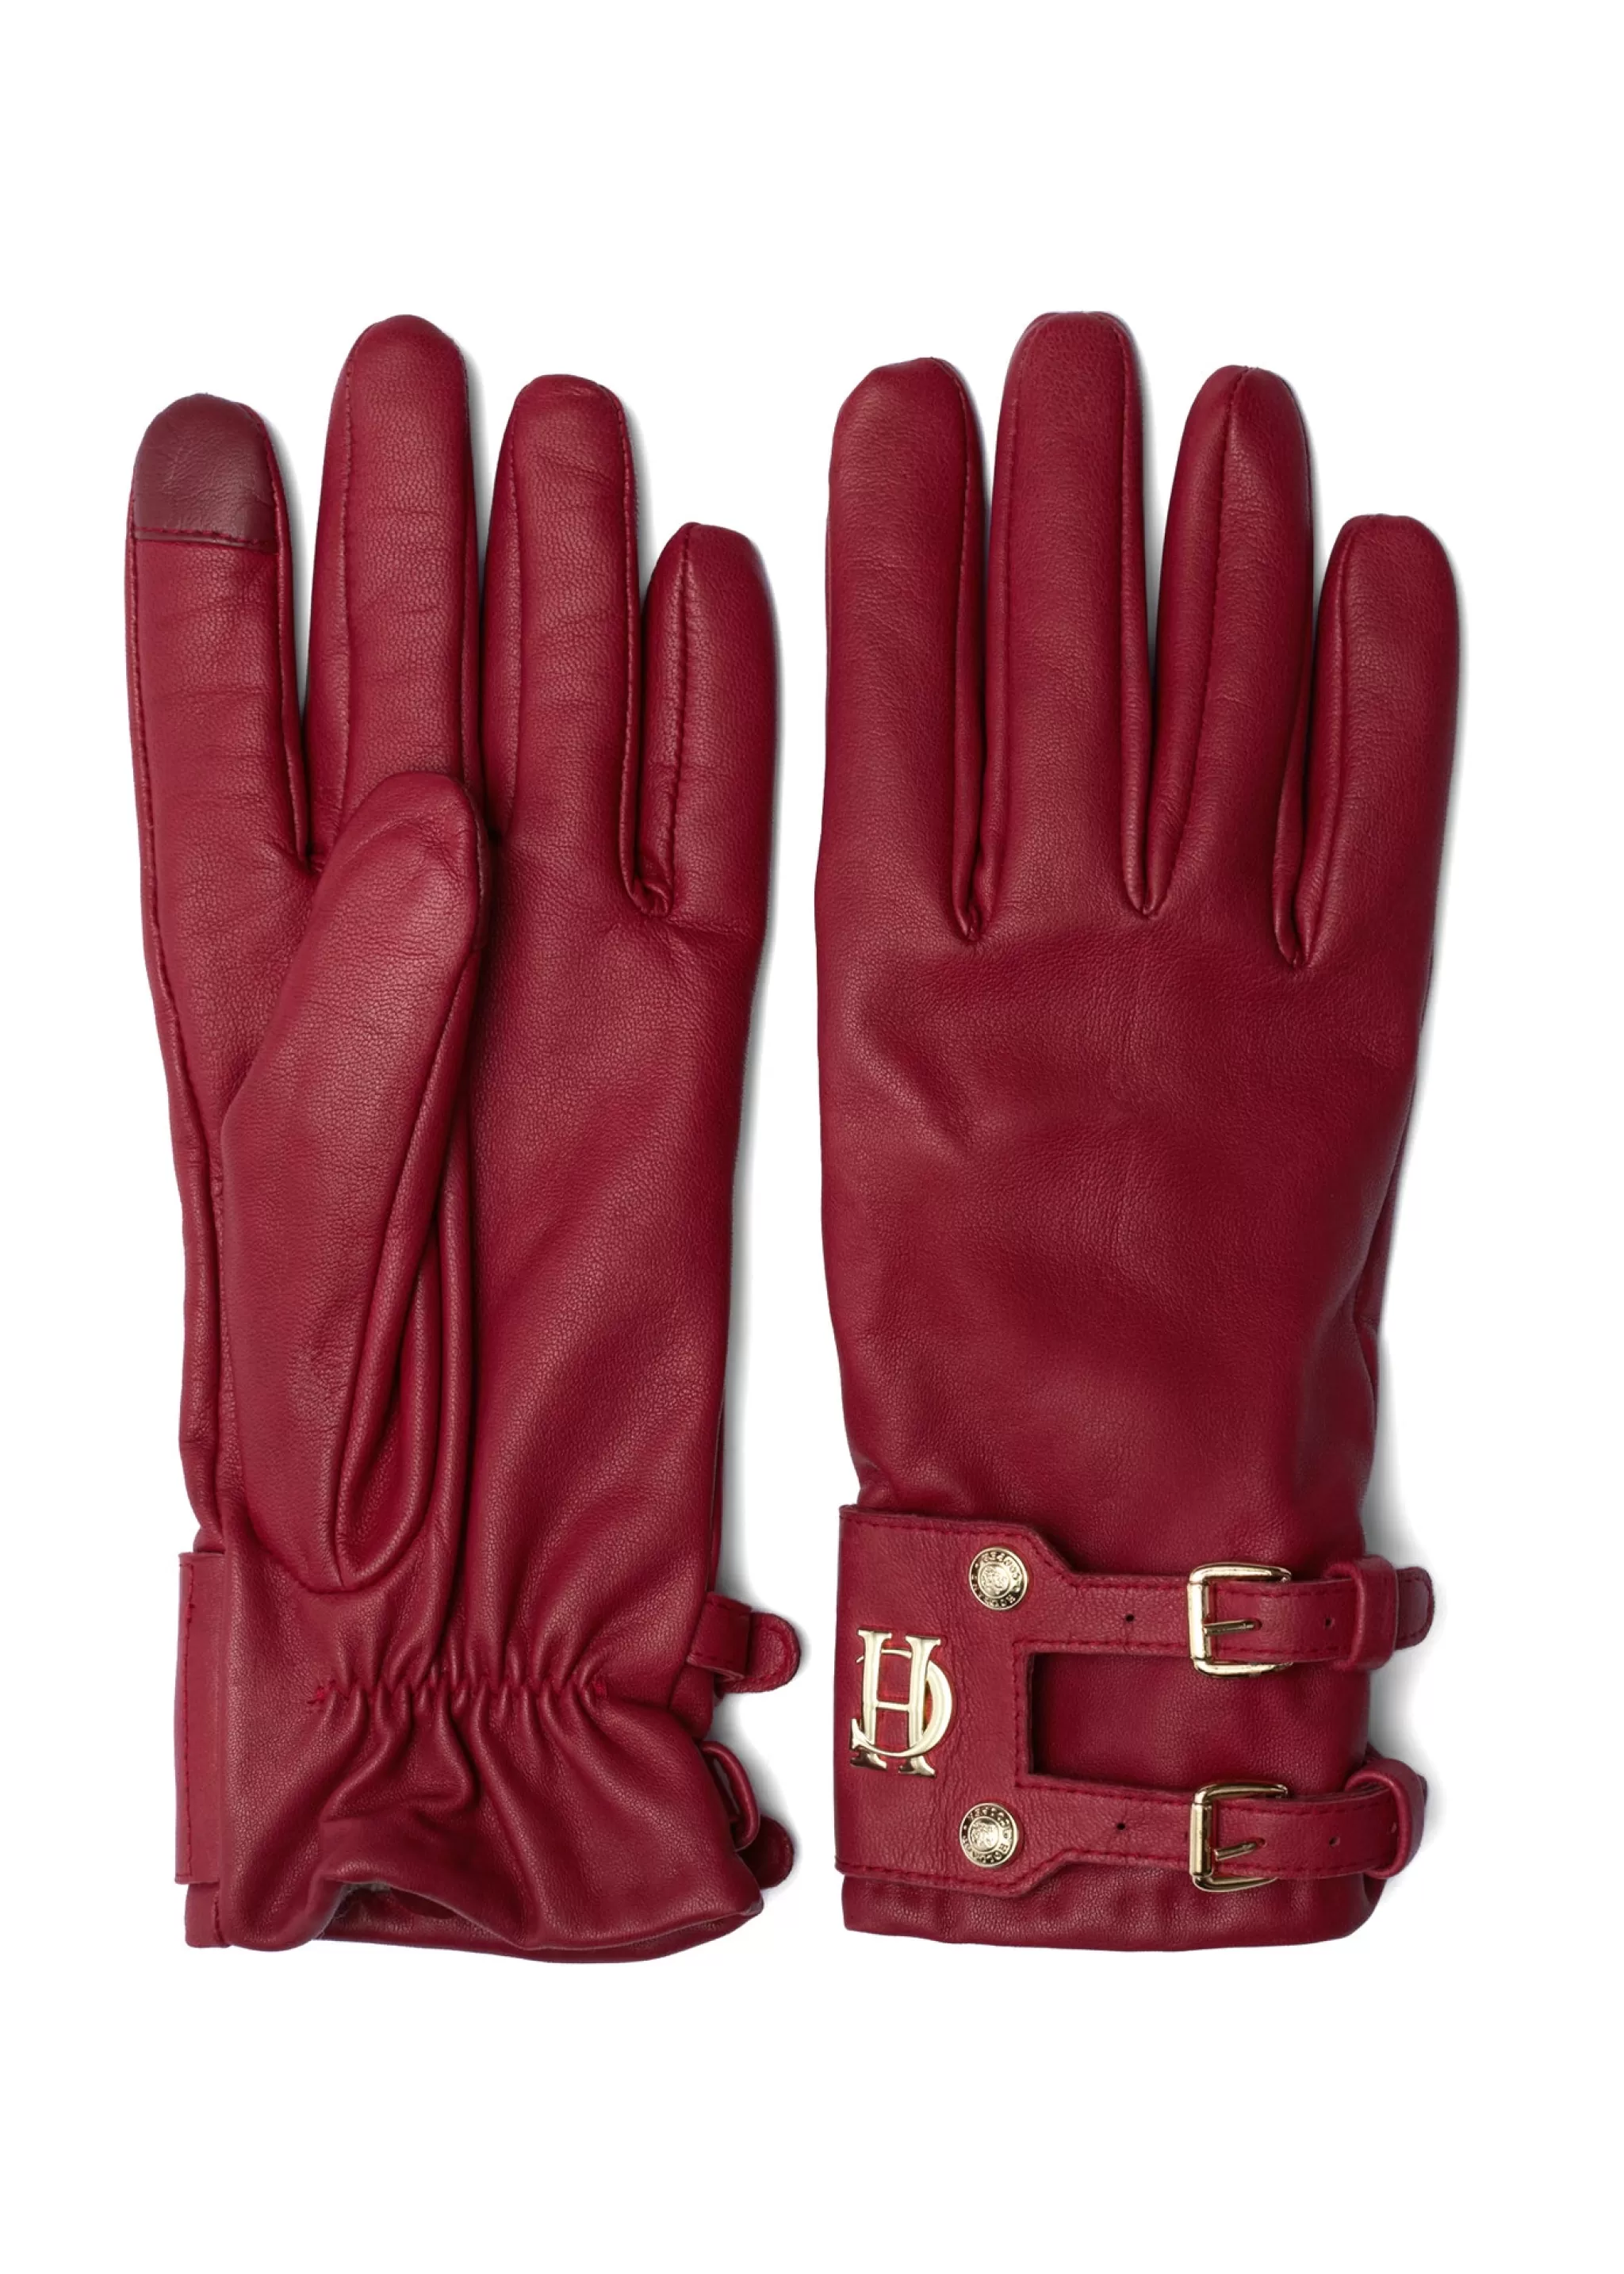 Monogram Leather Gloves>Holland Cooper Hot